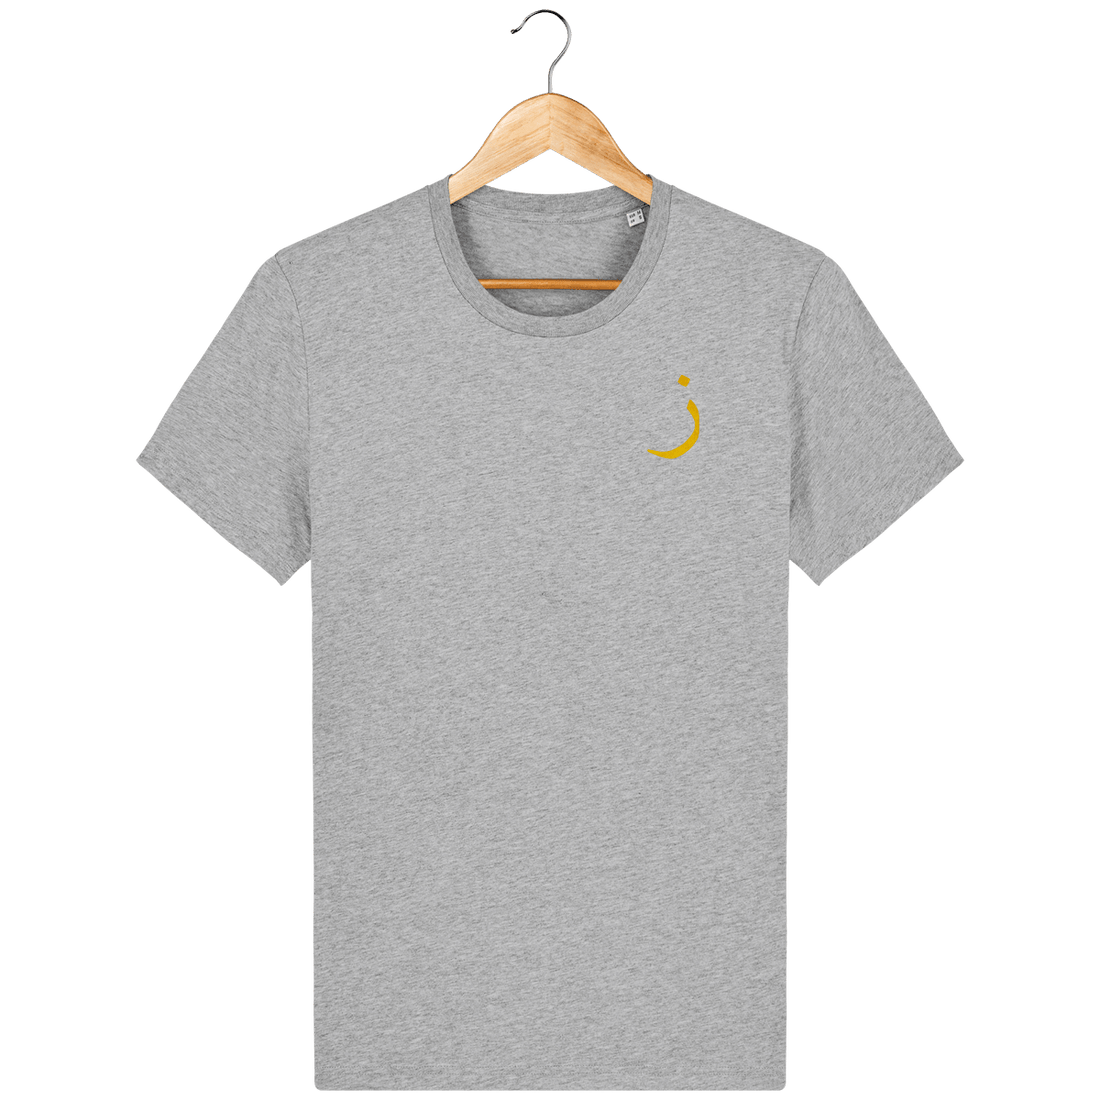 Unisexe>Tee-shirts - T-Shirt Homme <br> Lettre Arabe Zain